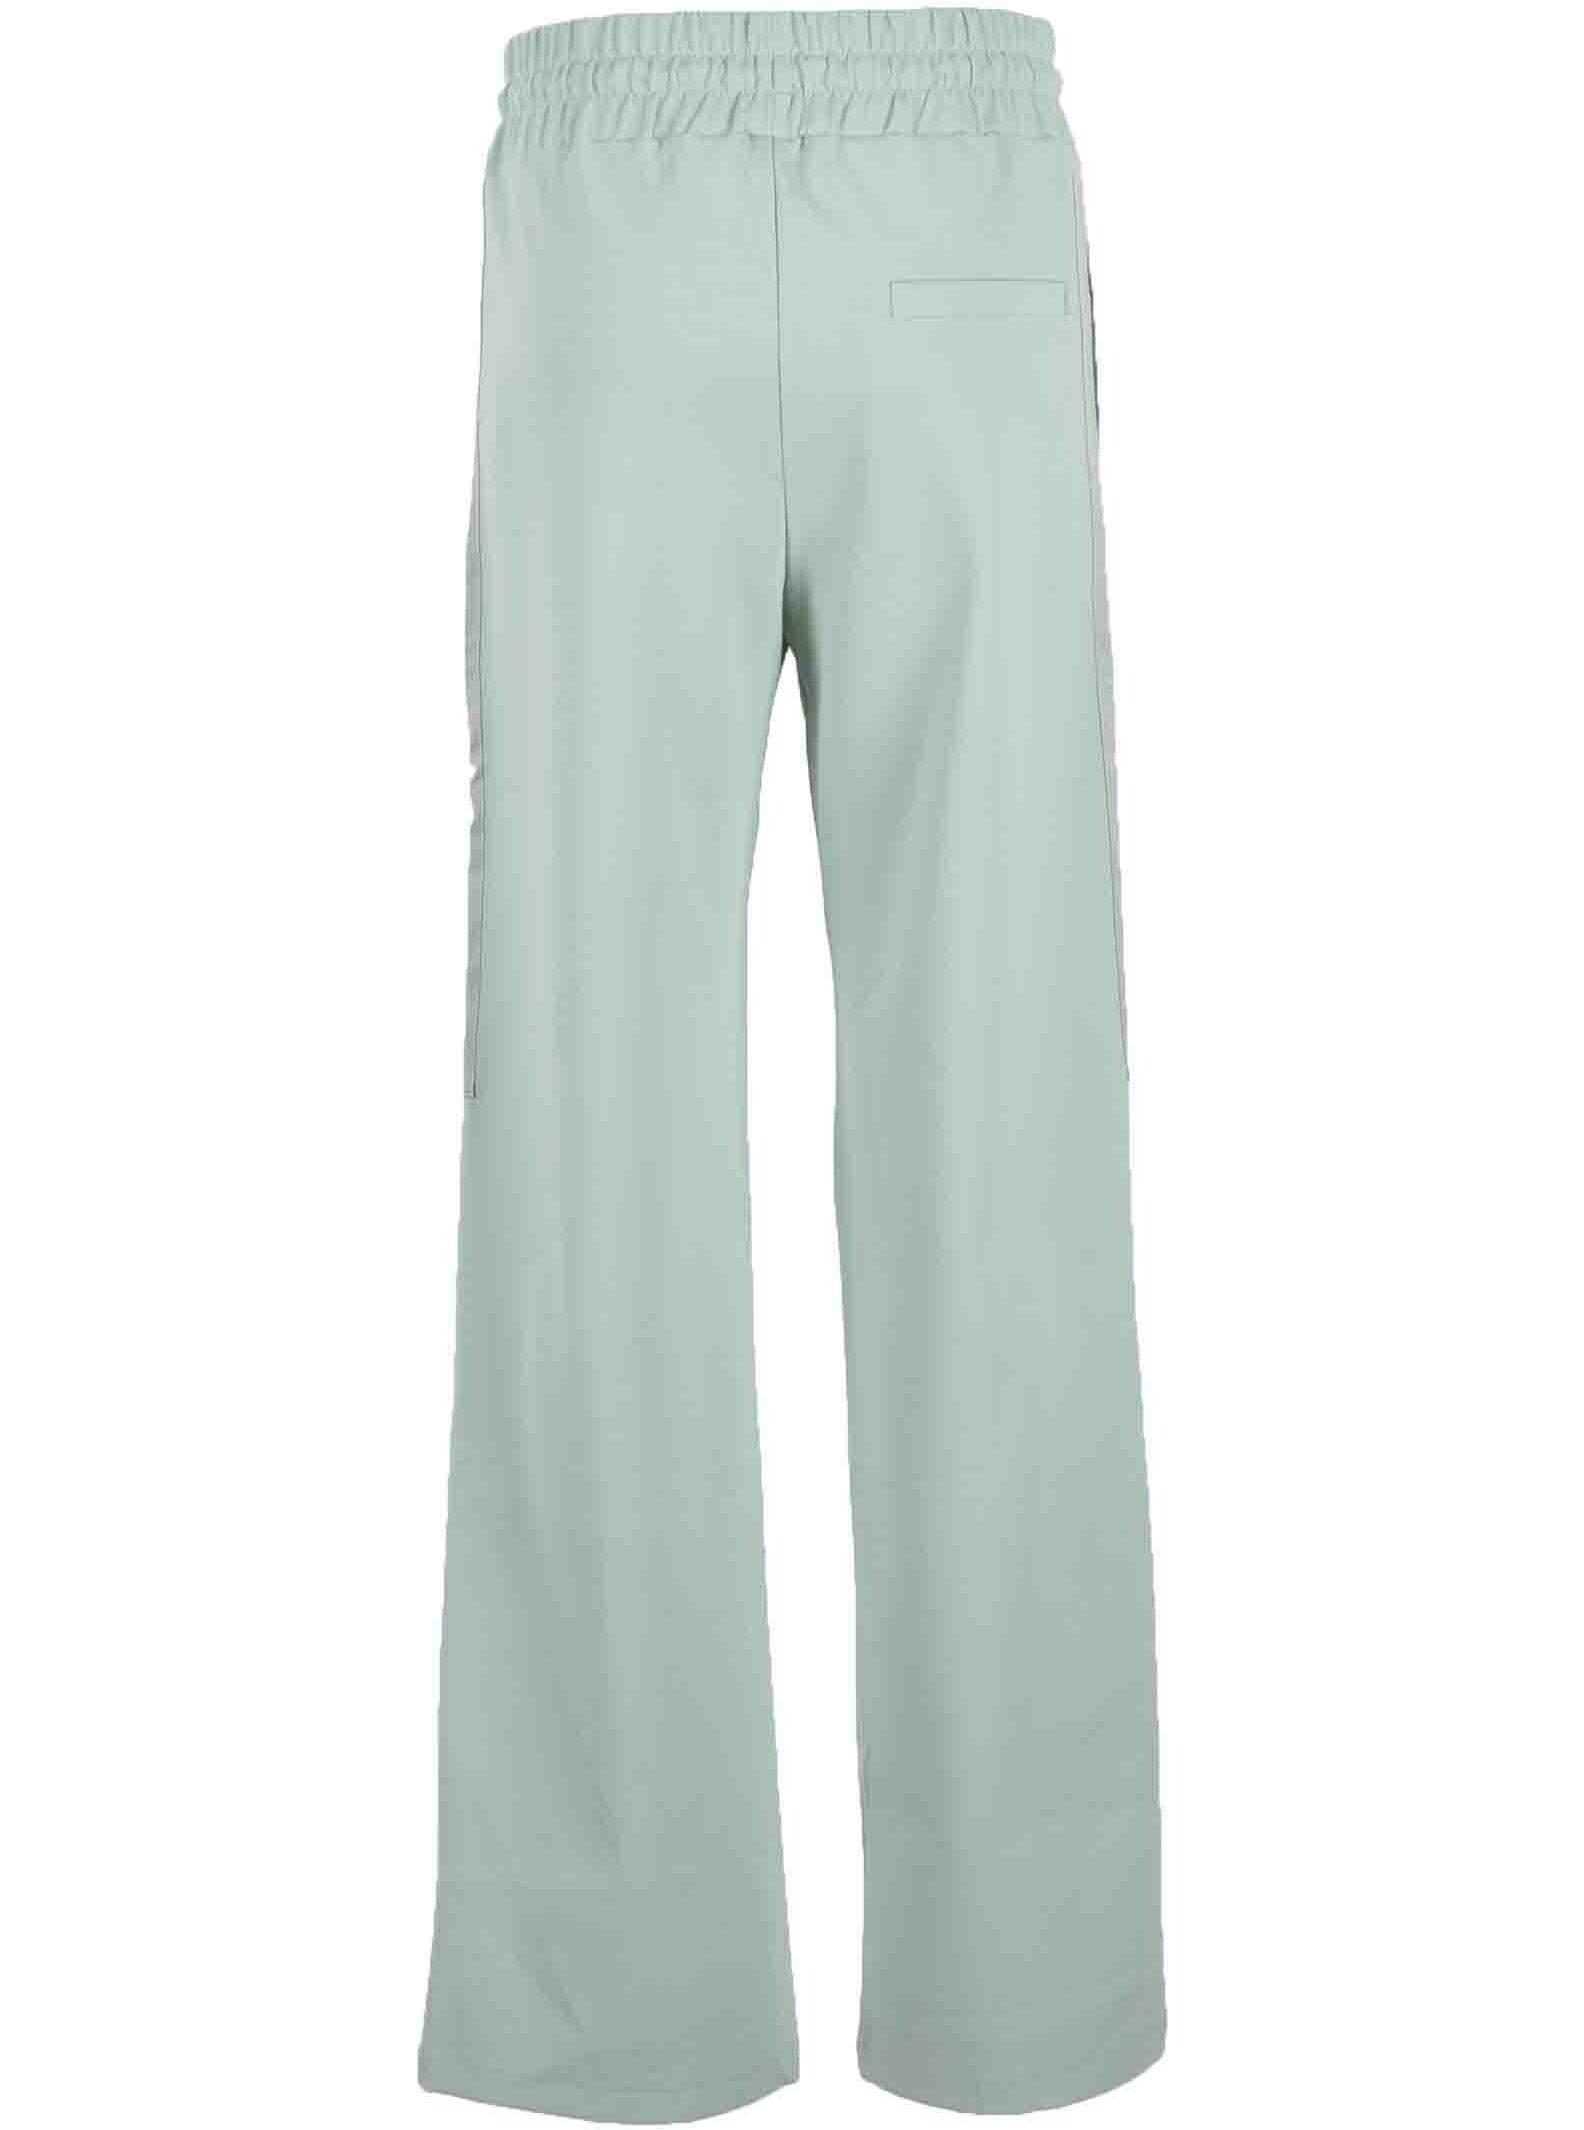 Premium Aqua Embellished Sheer Pants